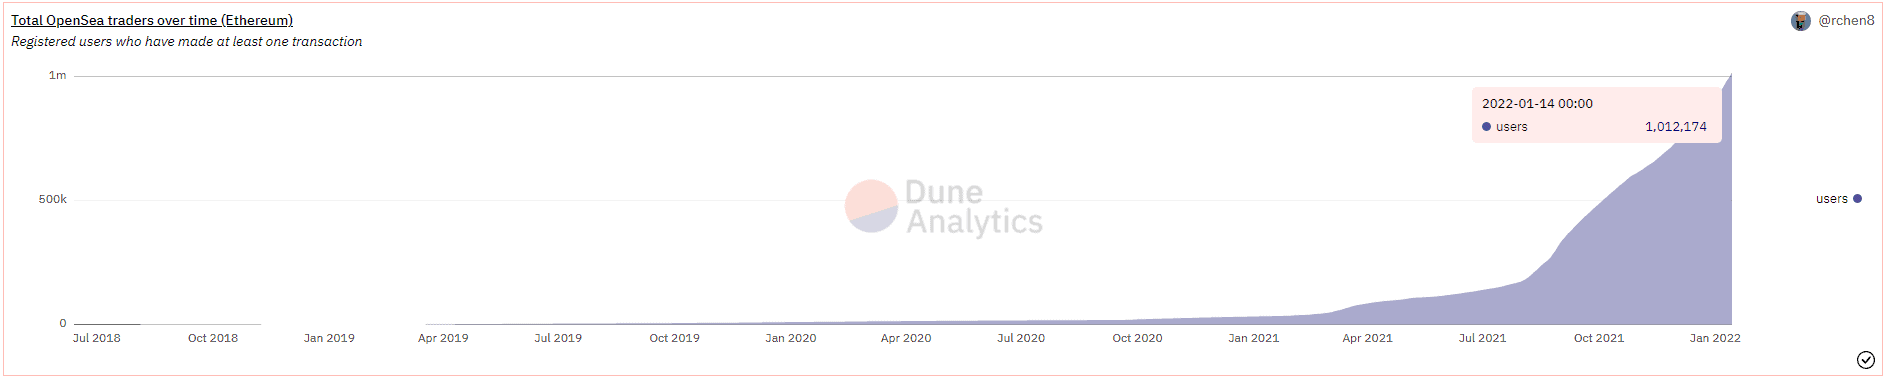 img1 duneanalytics - بازار OpenSea از یک میلیون کیف پول کاربری فعال عبور کرد